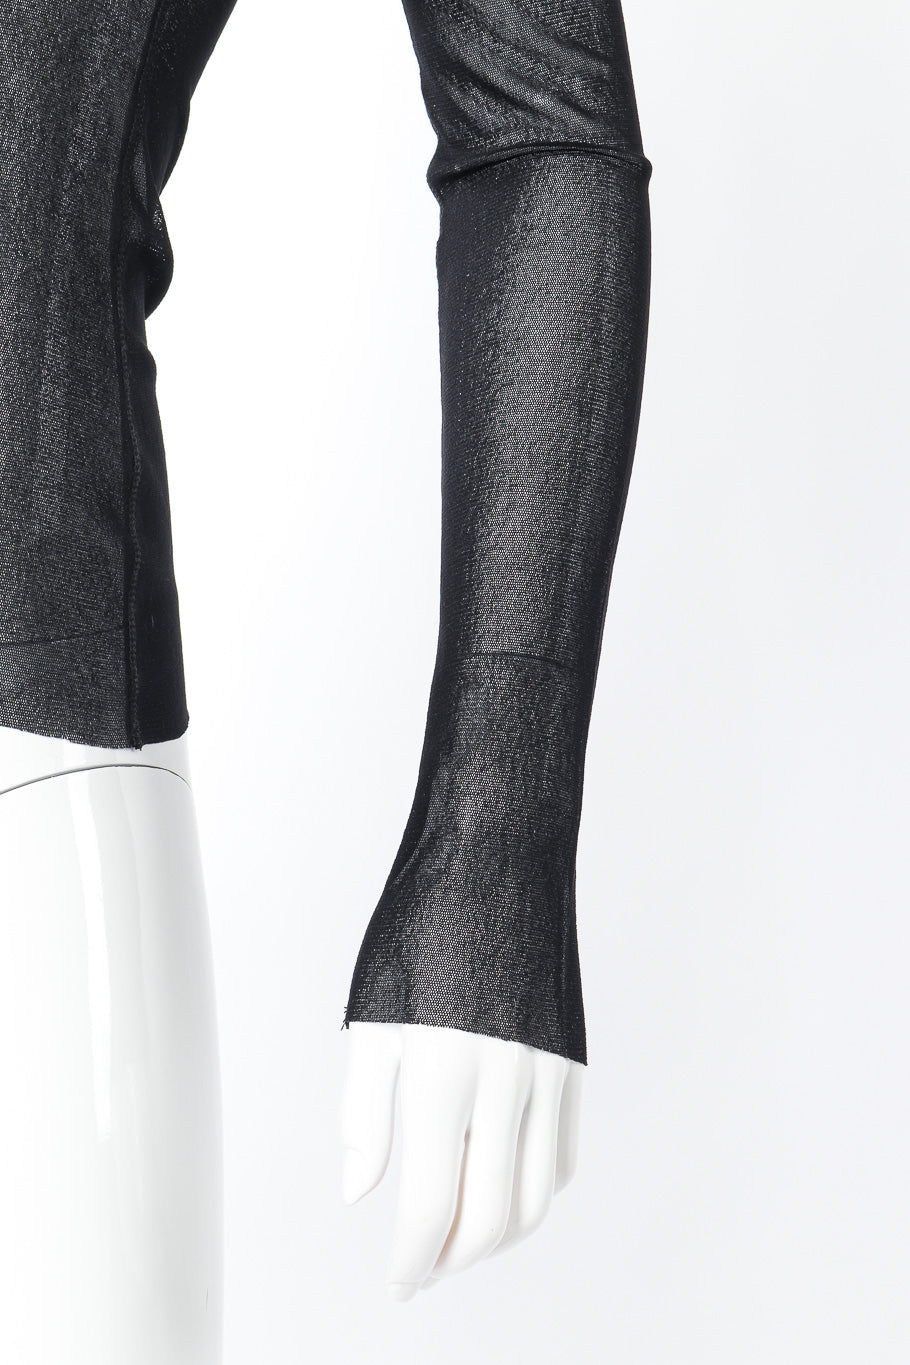 Vintage Jean Paul Gaultier Soleil Mesh Turtleneck sleeve closeup on mannequin @Recessla